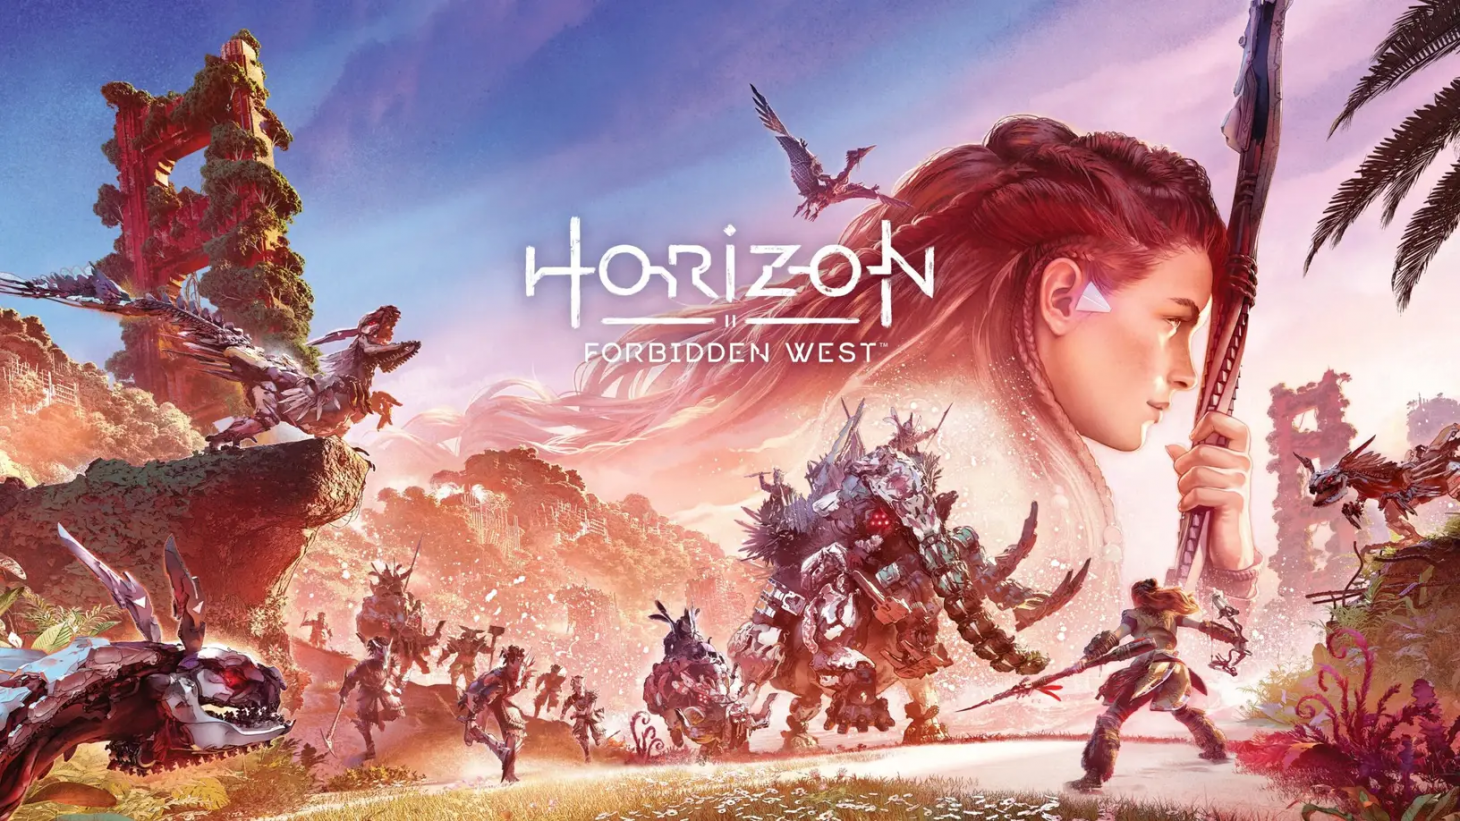 Horizon Forbidden West Burning Shores DLC pre-load is…